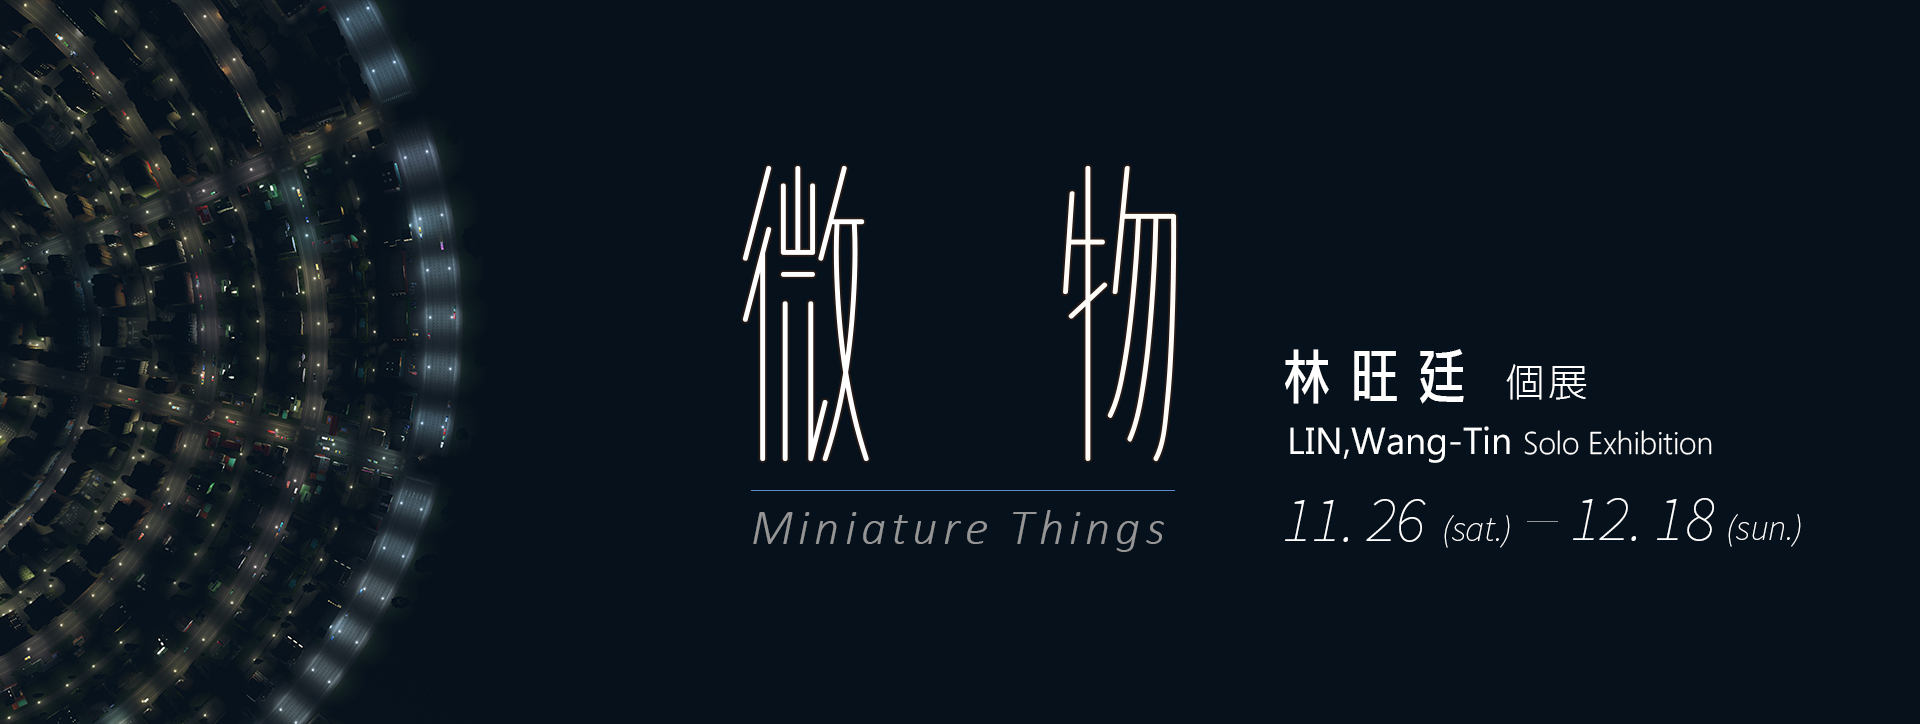 Miniature Things – LIN, Wang-Tin Solo Exhibition